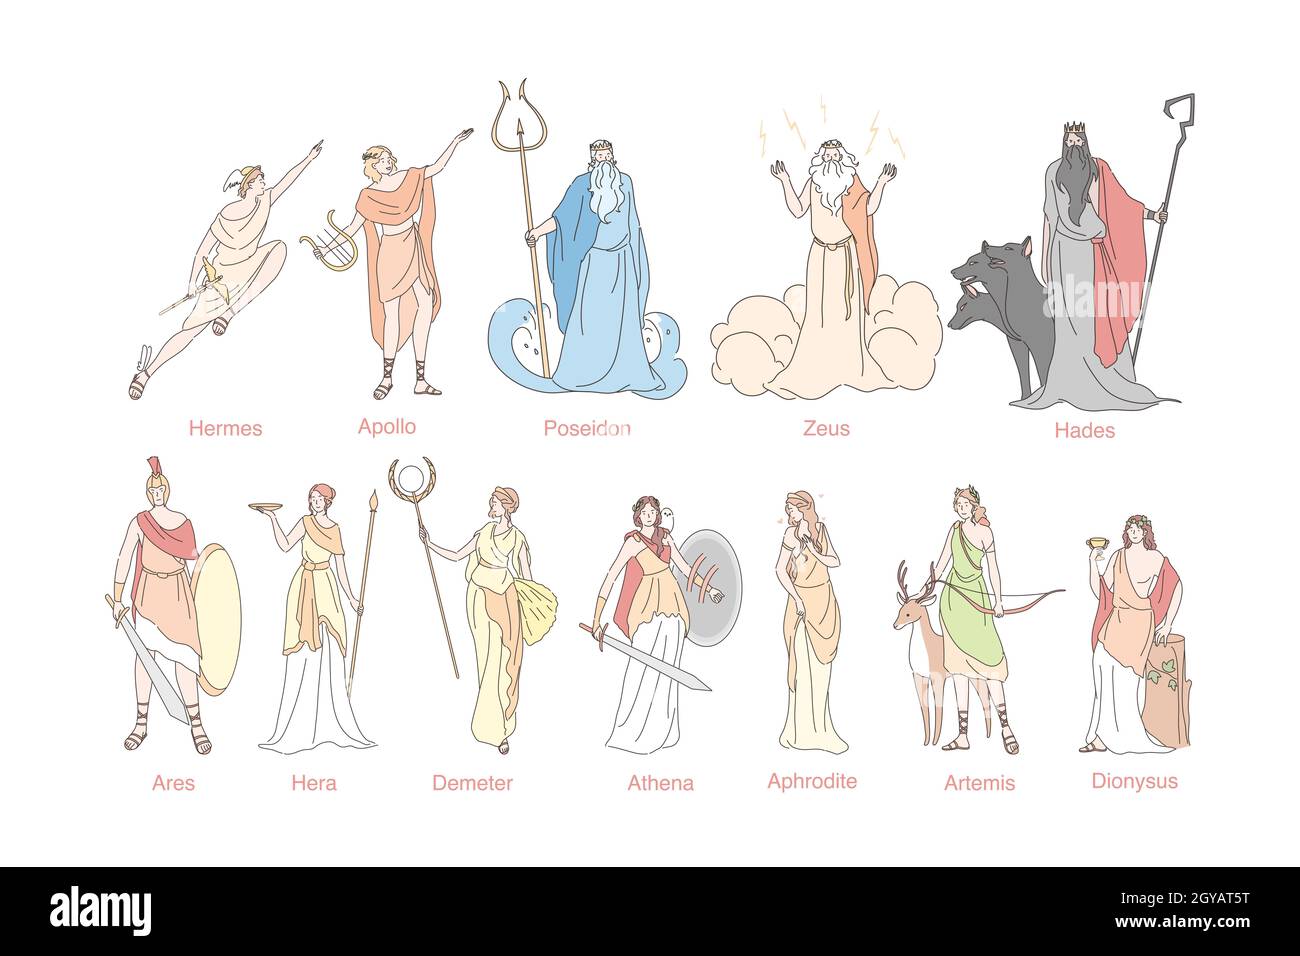 Ancient greek gods set concept. God pantheon in Greece Hermes, Apollo, Poseidon, Zeus, Hades, Ares, Hera, Demeter, Athena, Aphrodite, Artemis and Dion Stock Photo